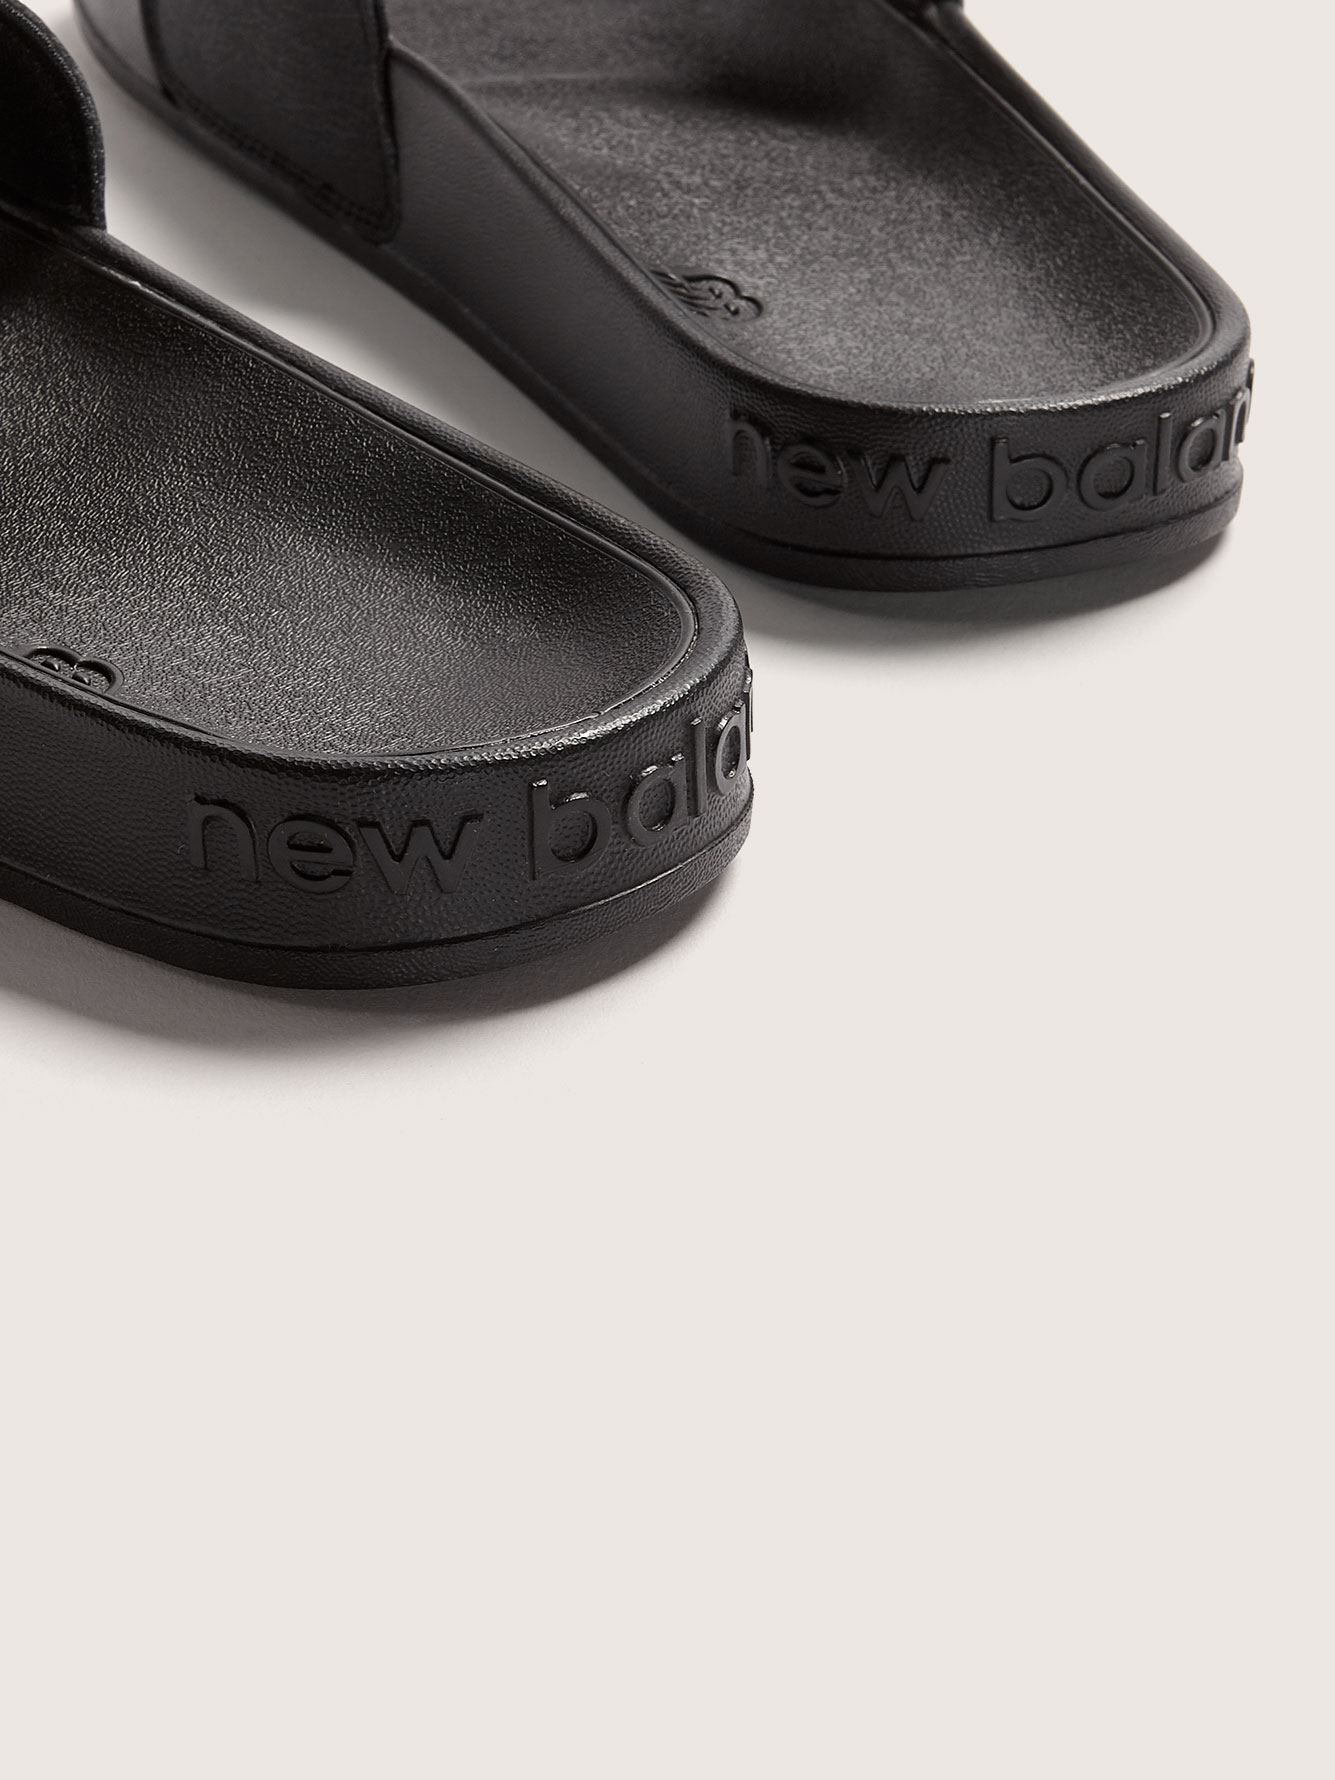 new balance sandals wide